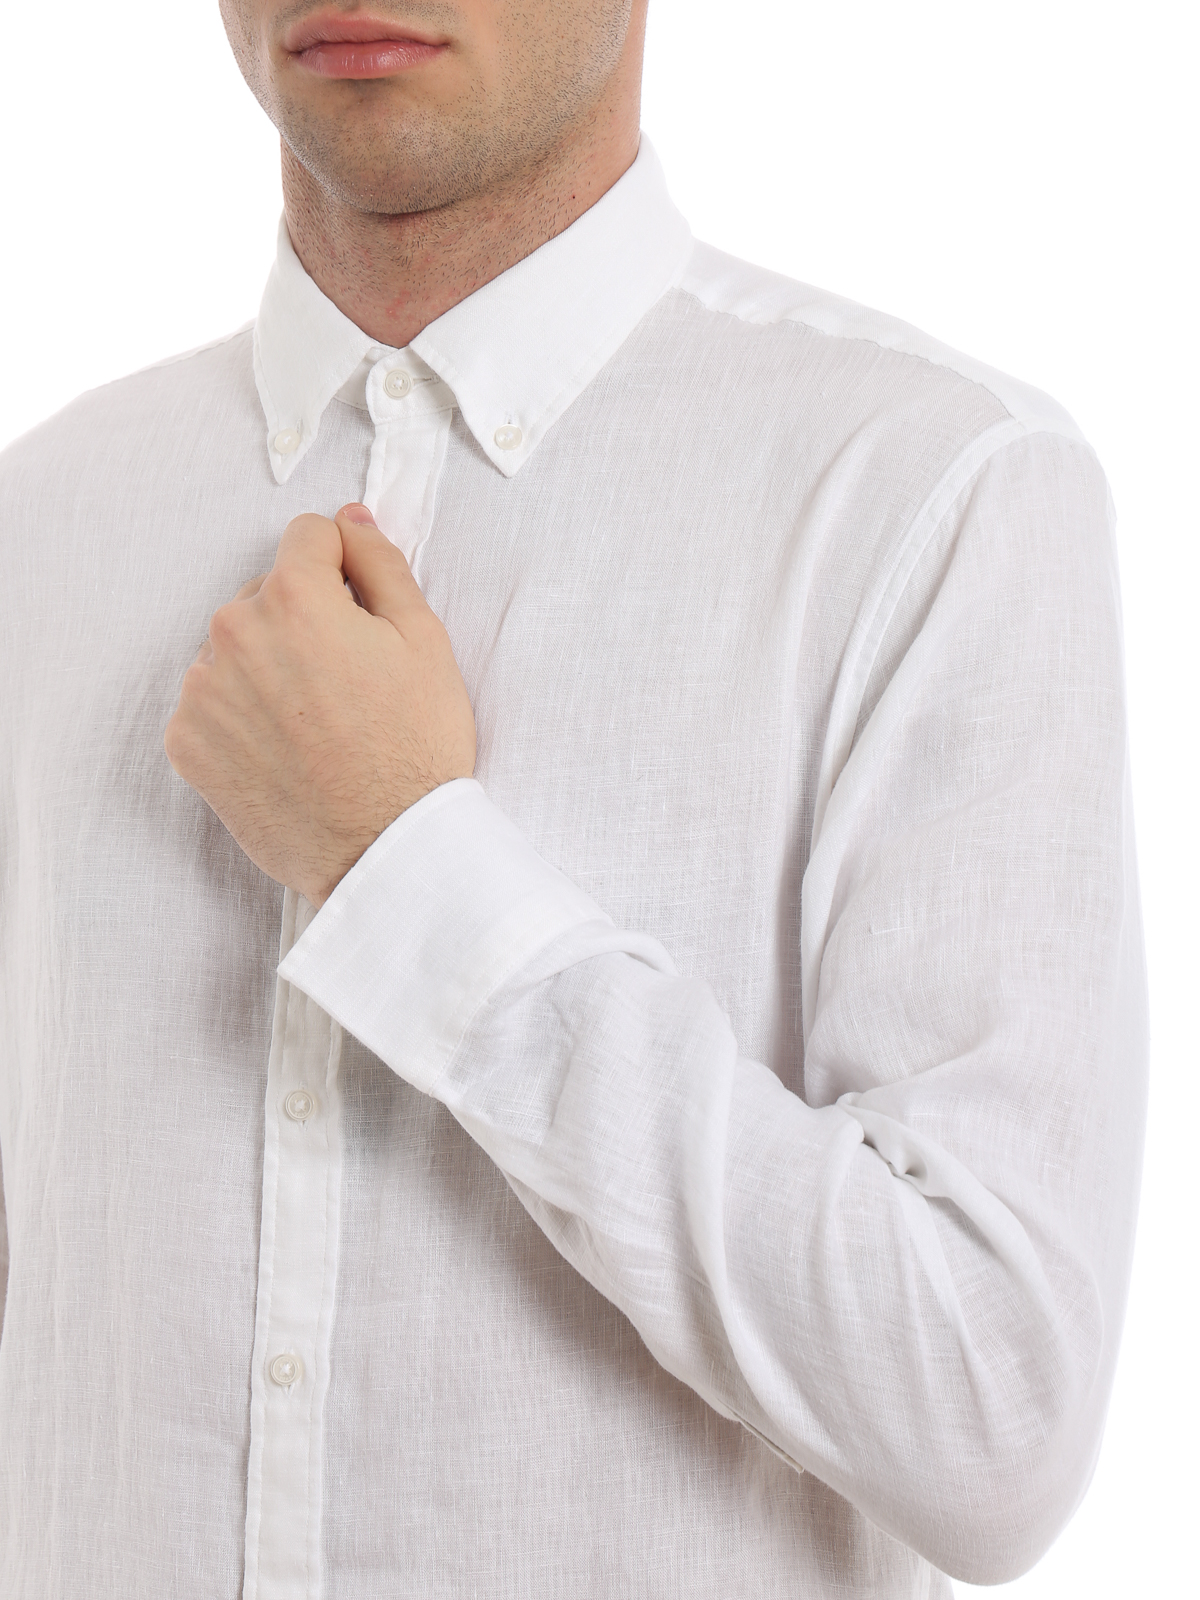 michael kors button down shirts